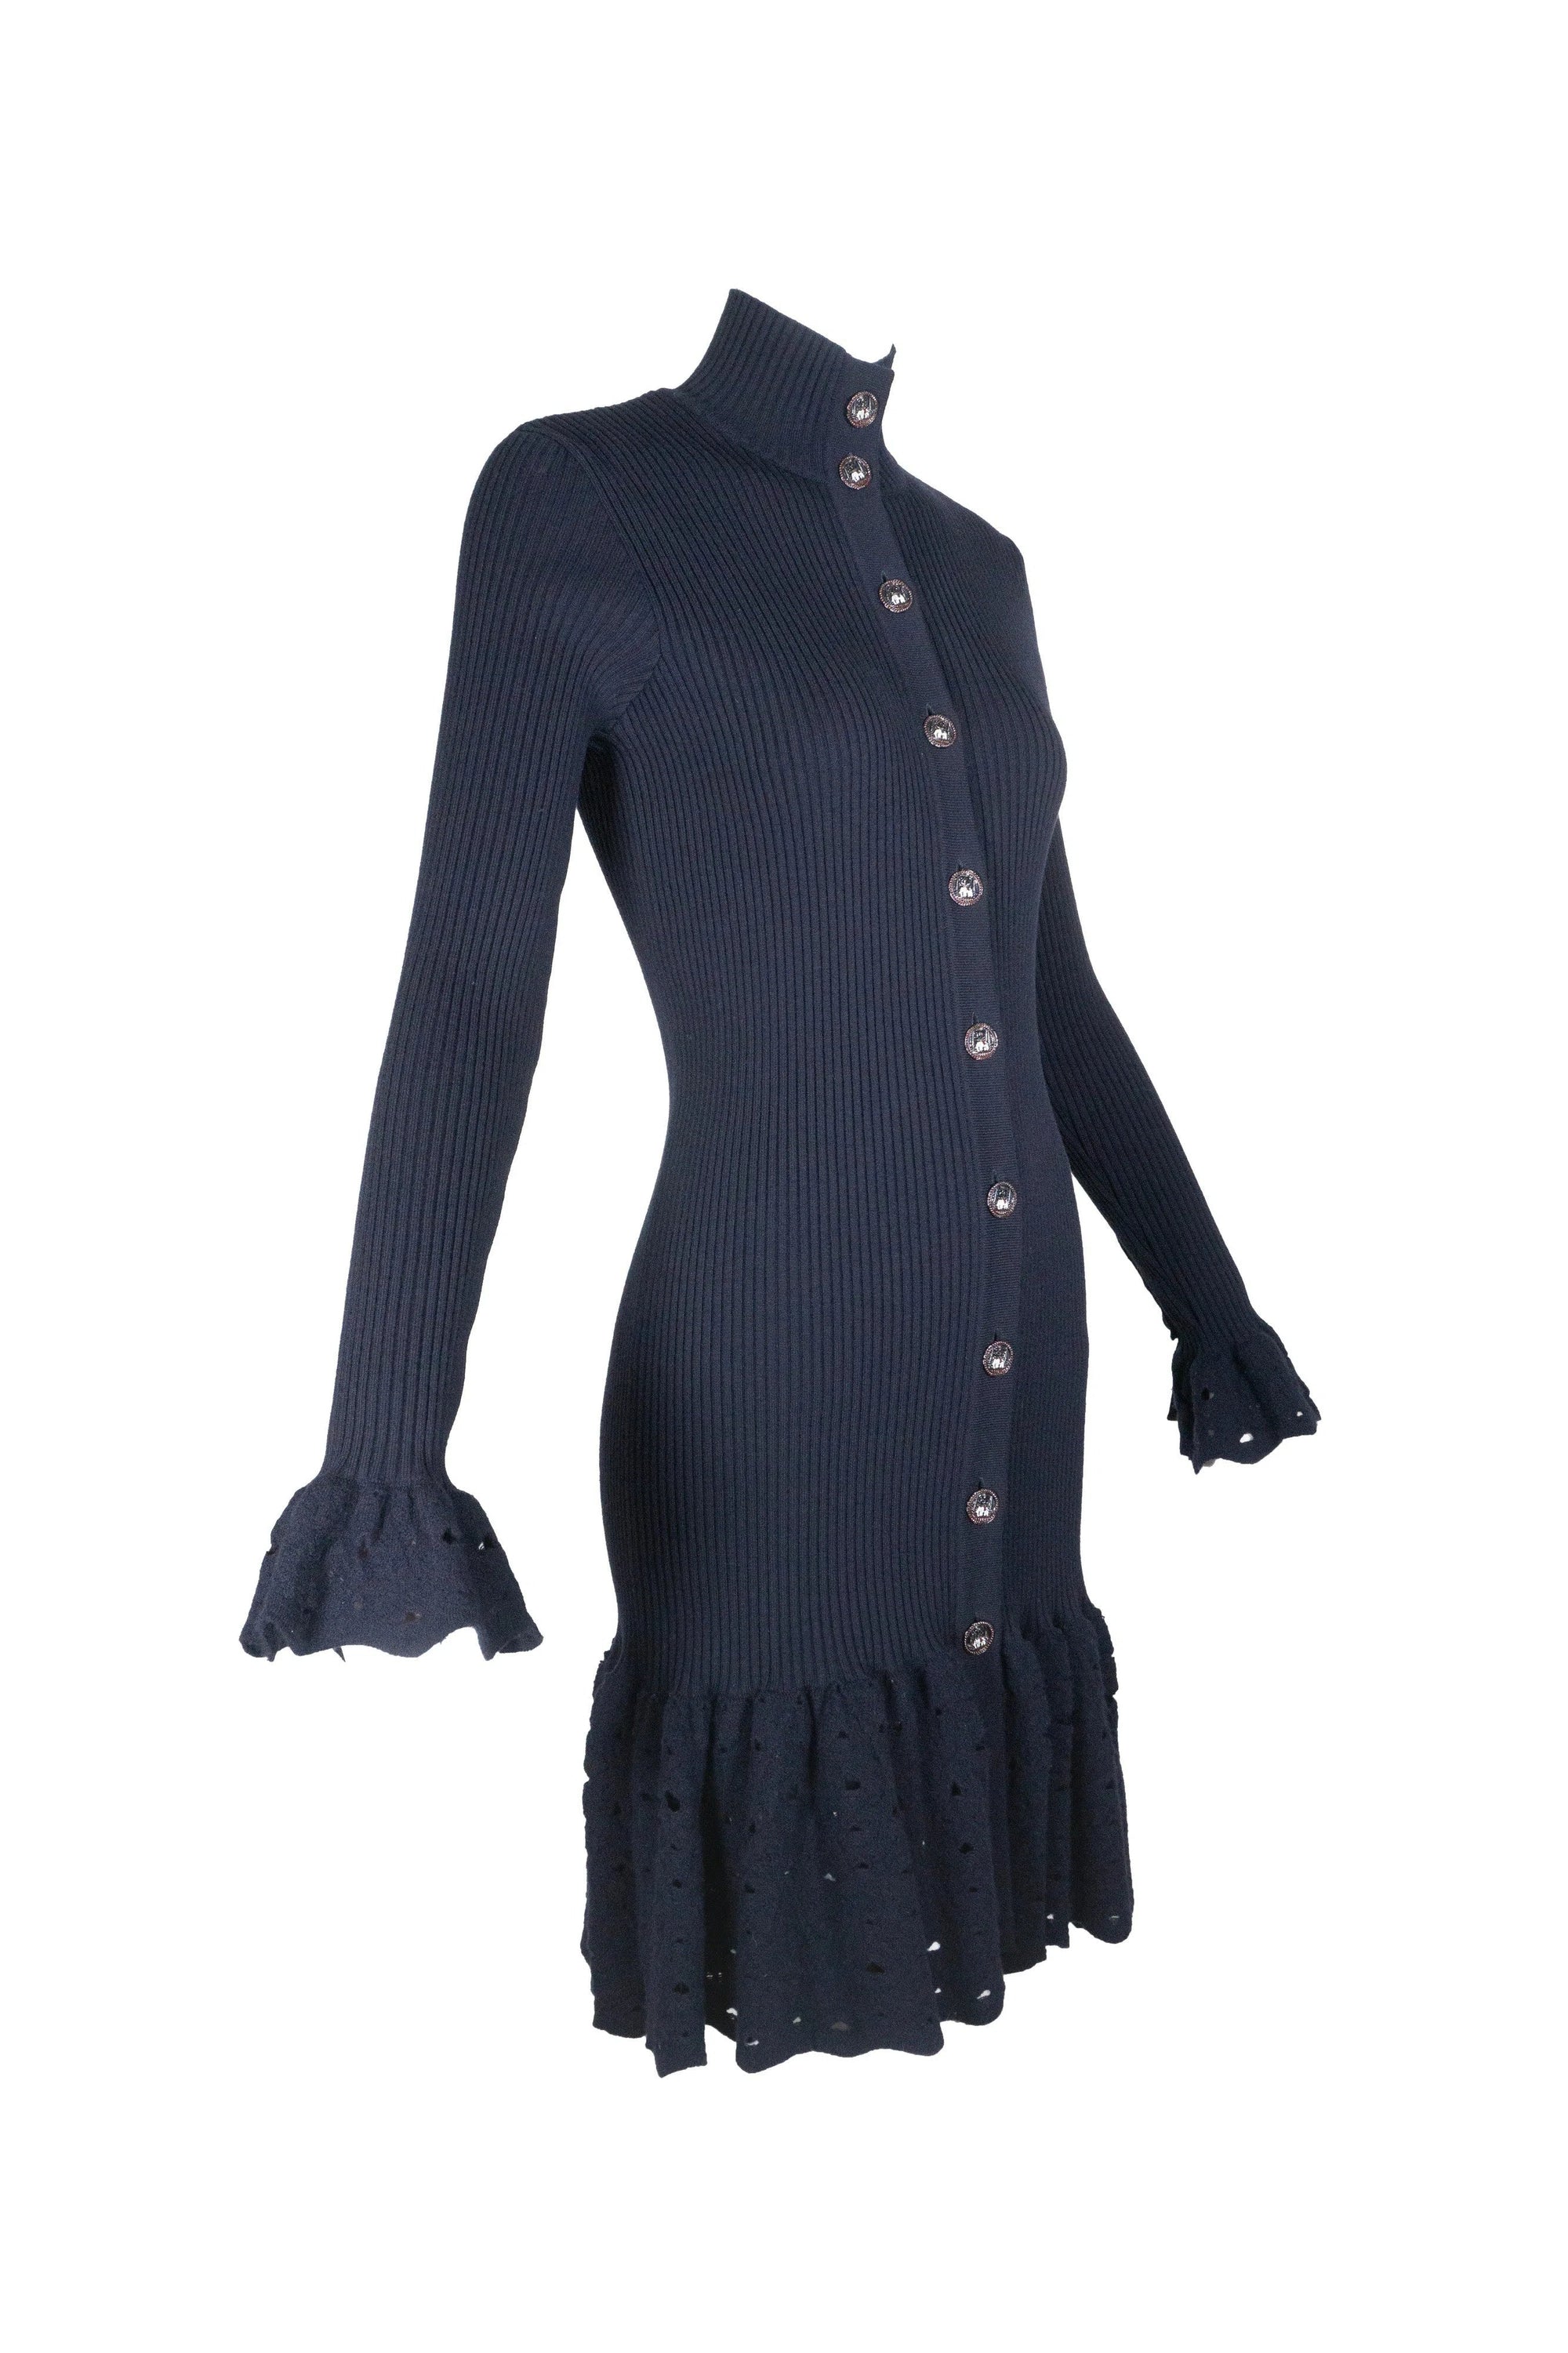 Chanel Paris Bombay Knit Dress - Foxy Couture Carmel